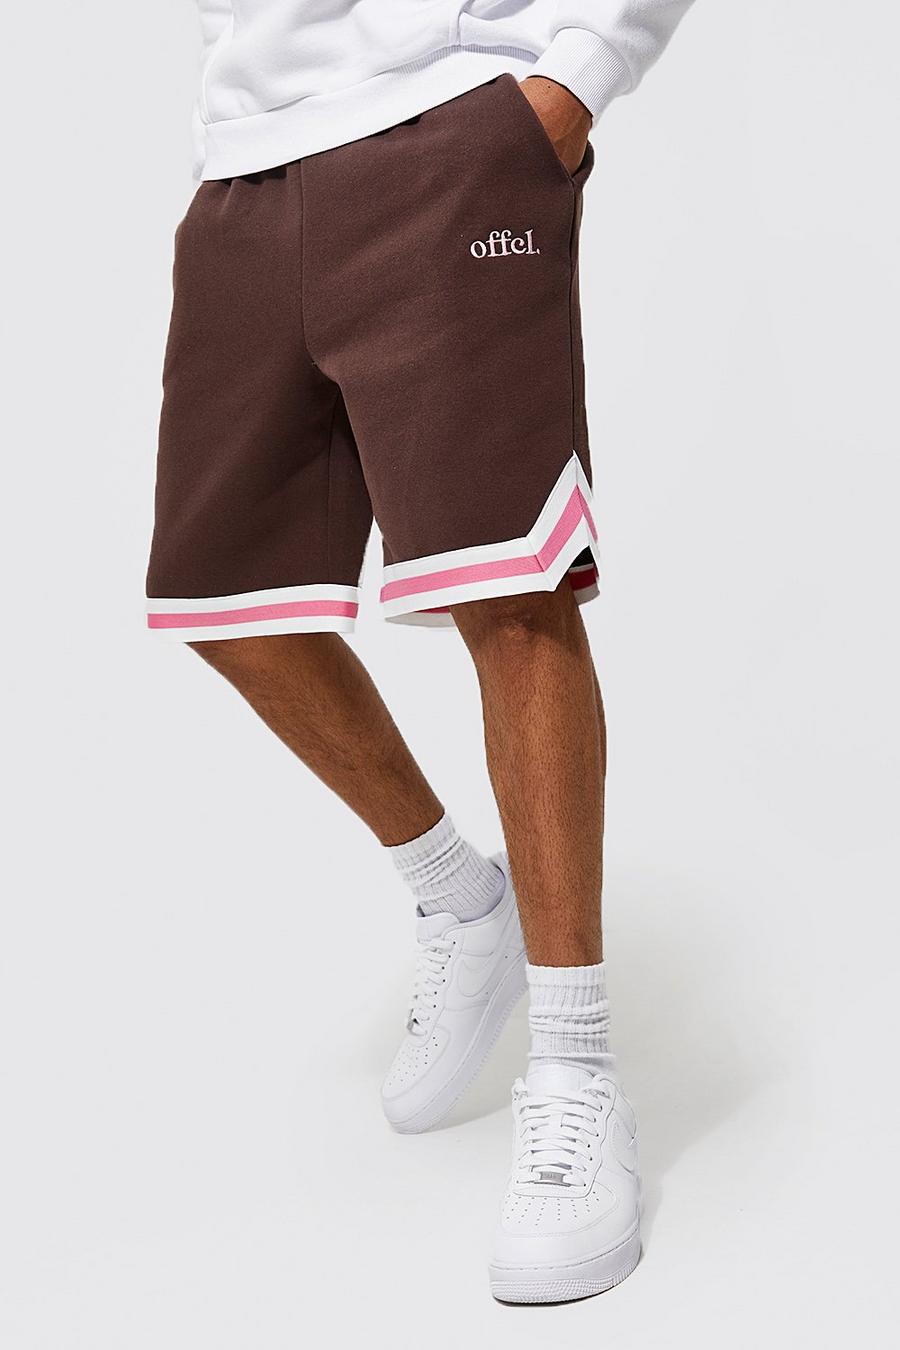 Pantalón corto Offcl de baloncesto con cinta, Chocolate marrone image number 1